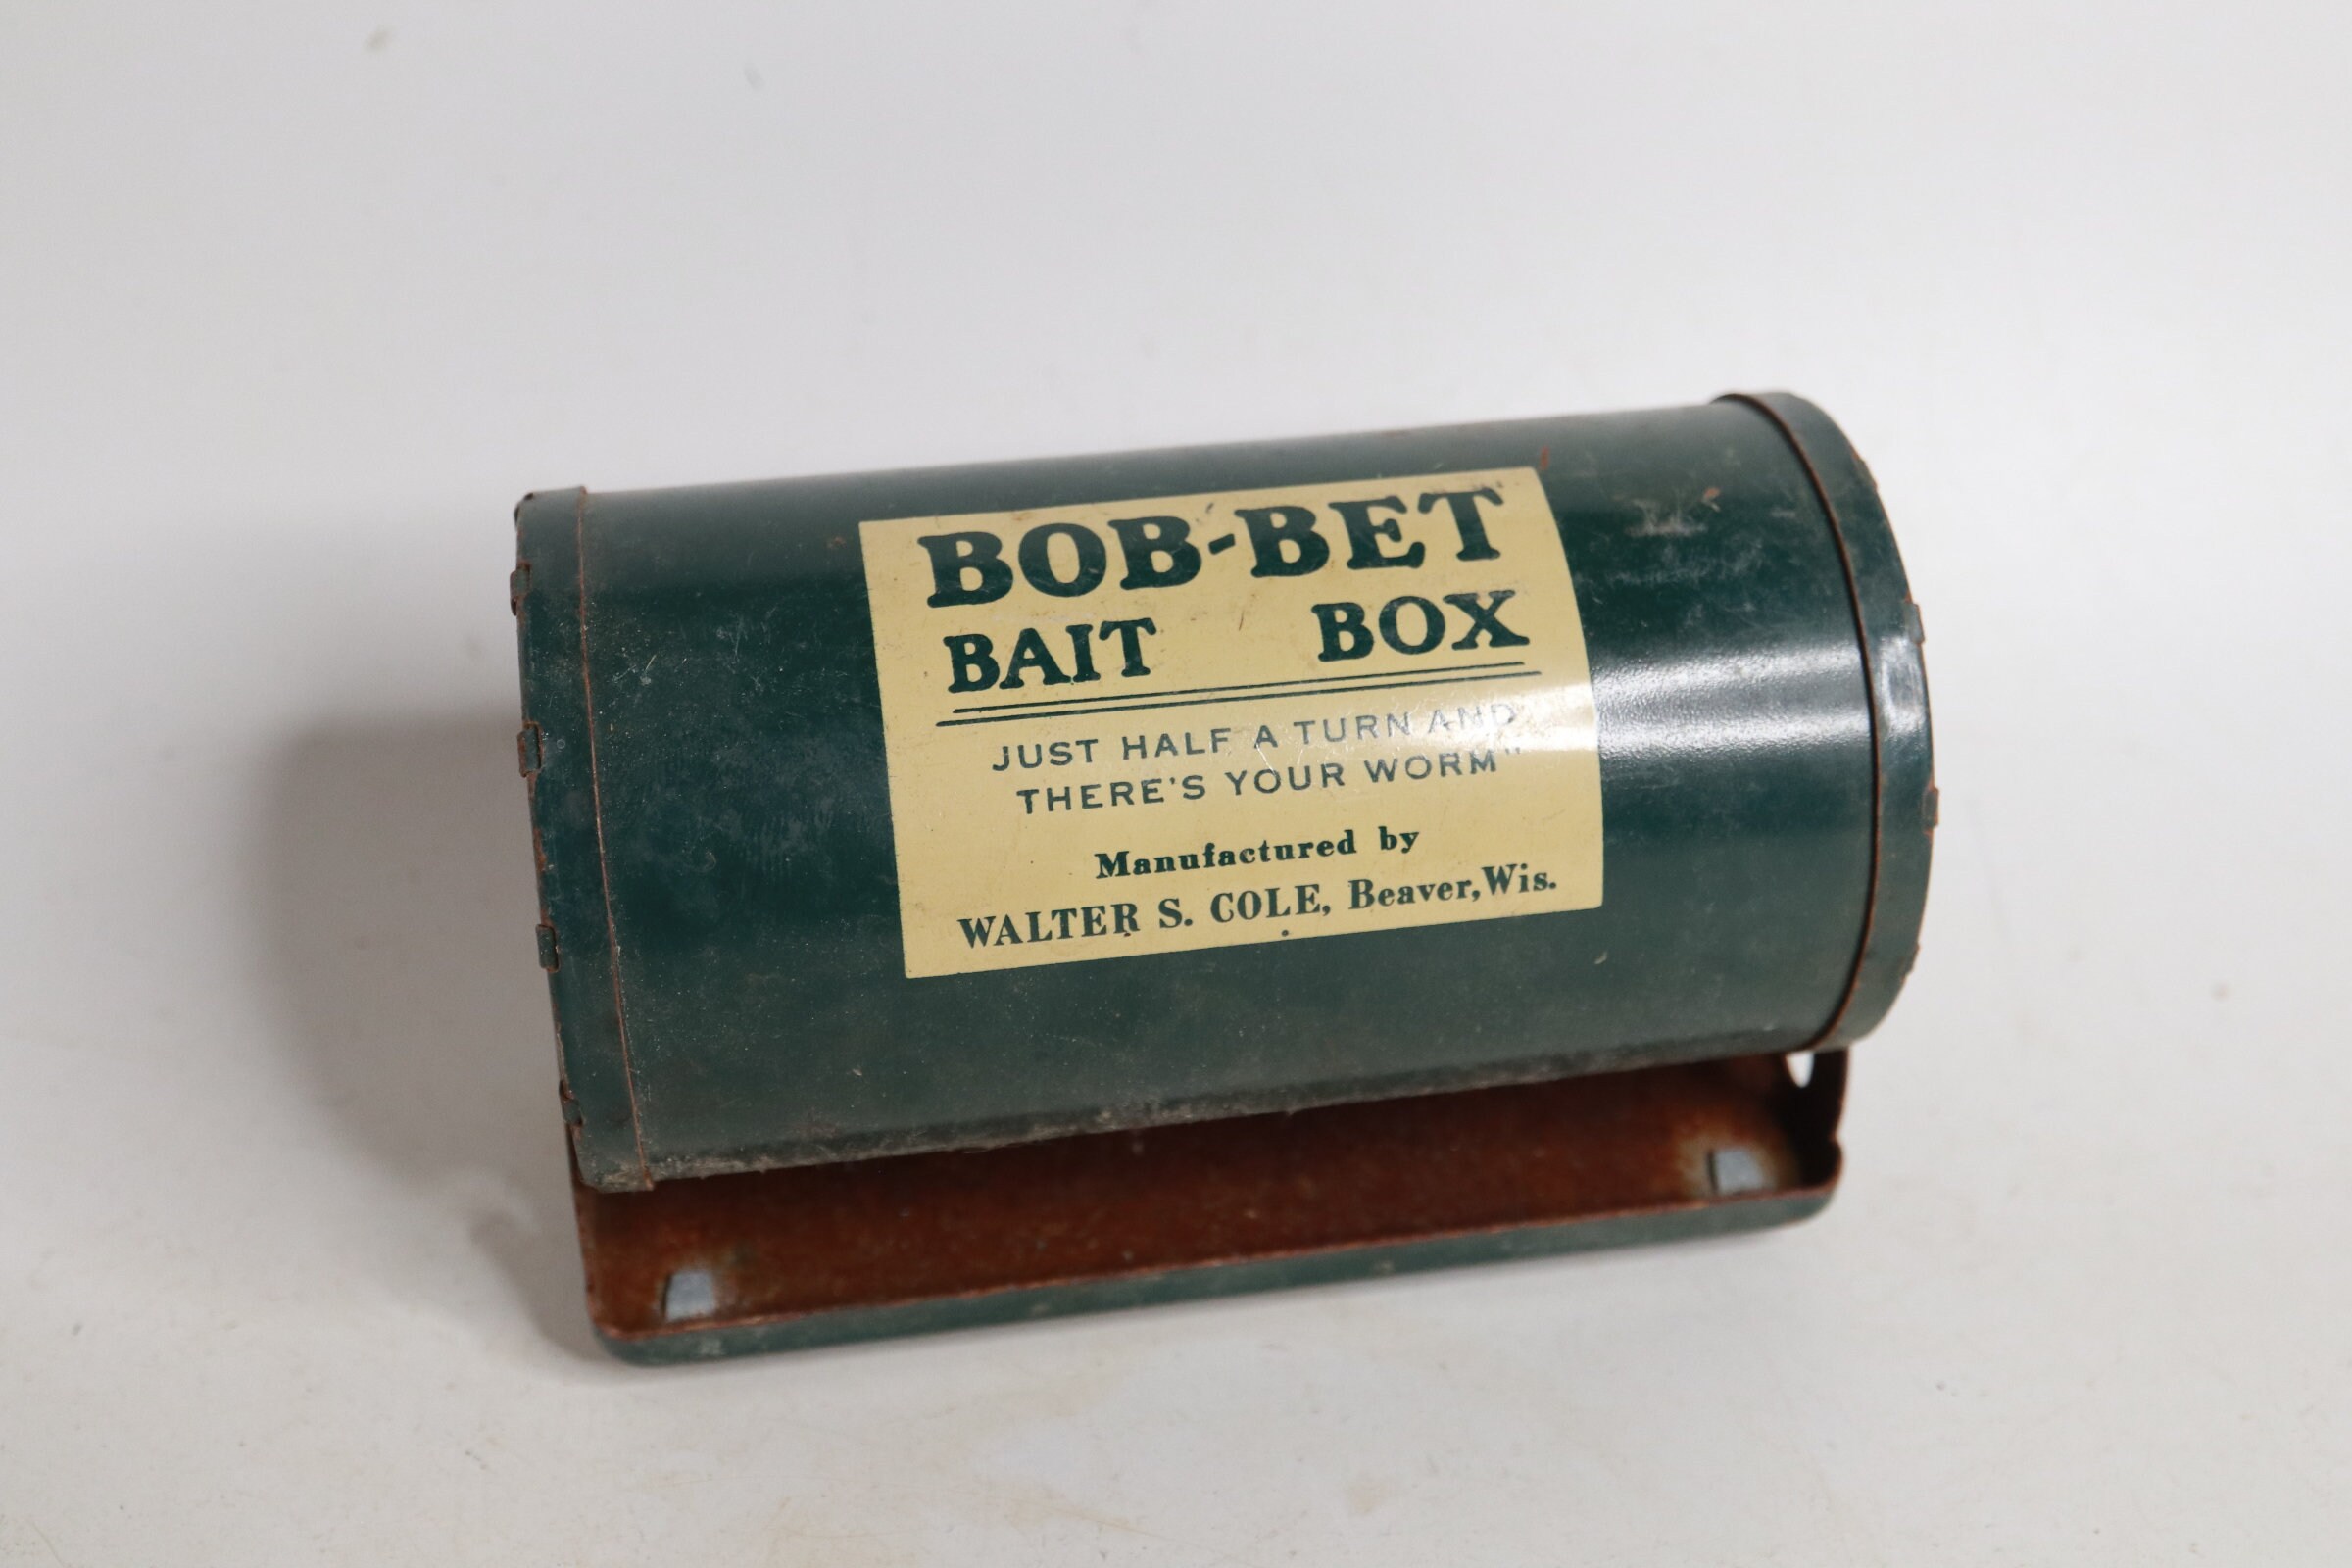 Bob-Bet Bait Box - Vintage Bait Box - Vintage Fishing